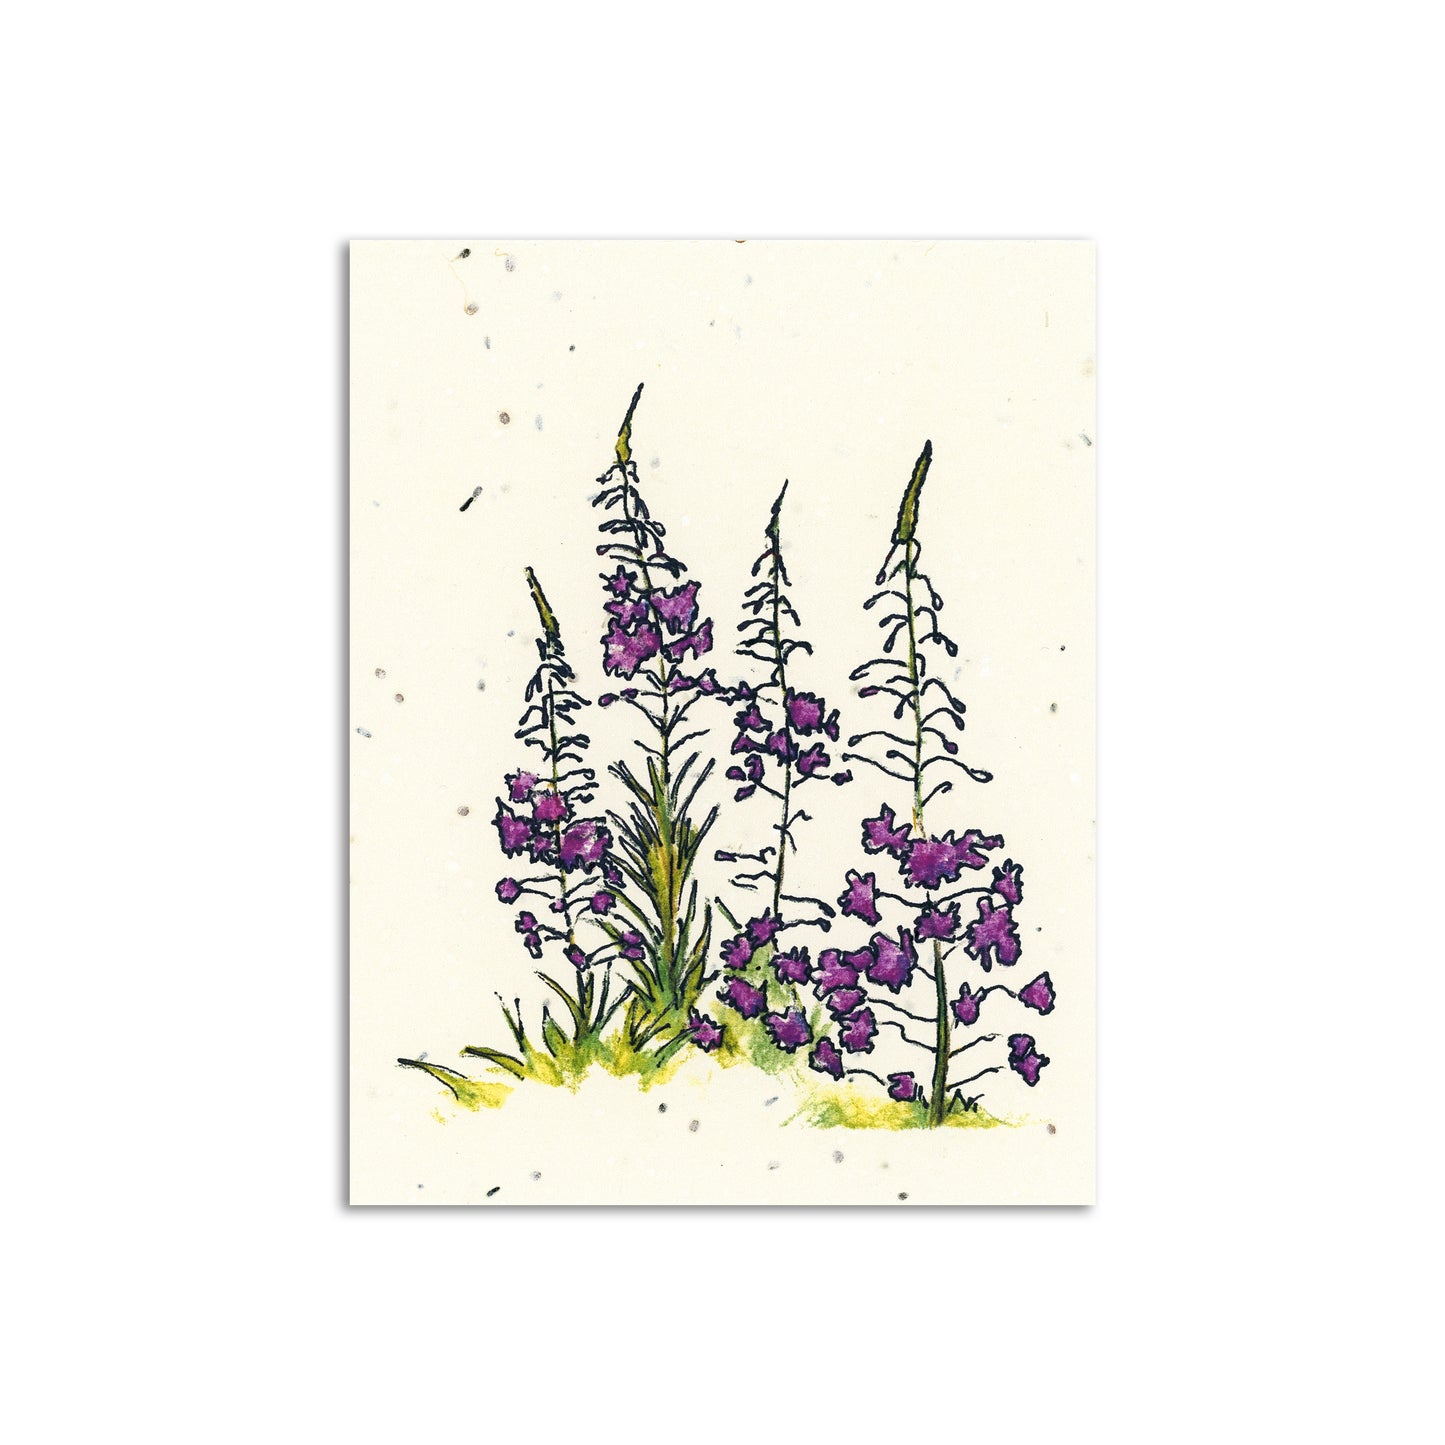 Woodland Wildflower x Sapphorica Creations Fireweed Wildflower Seed Art Card - Sapphorica Creations 